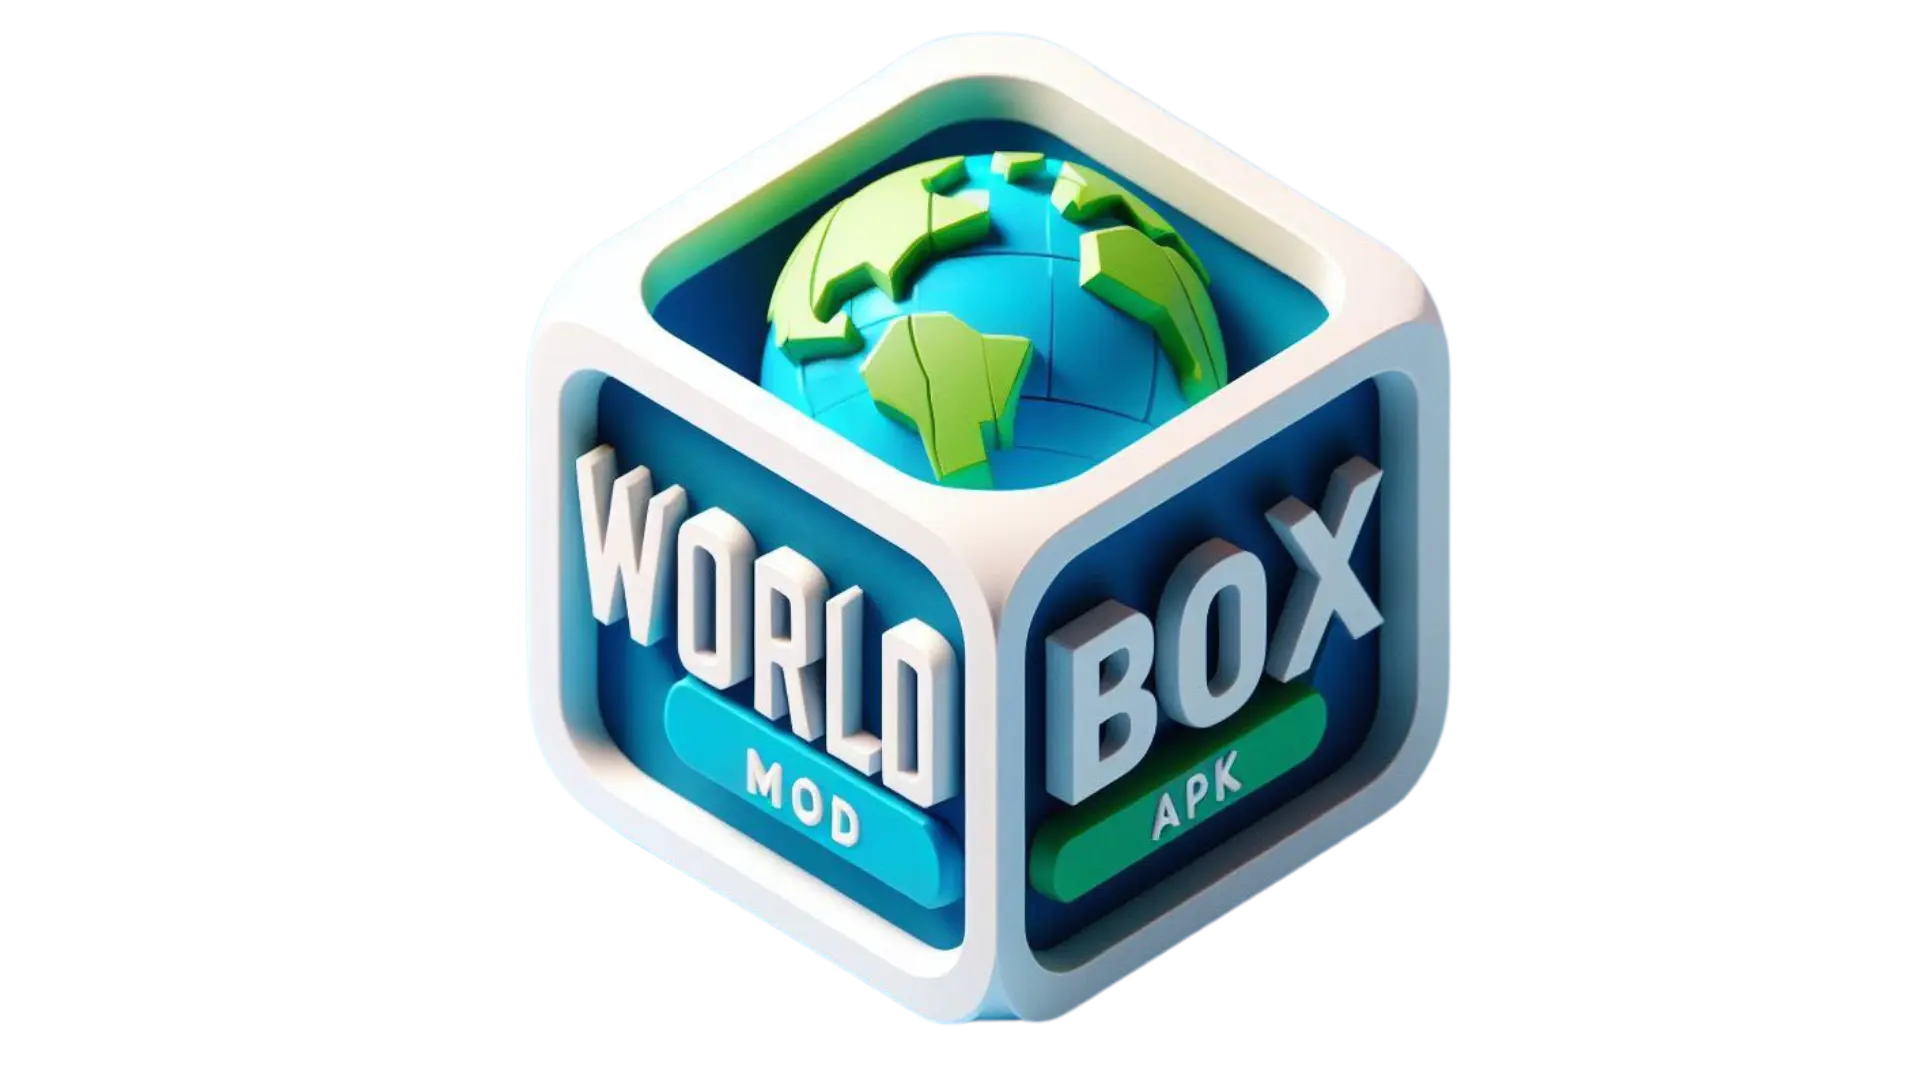 worldbox mod apk